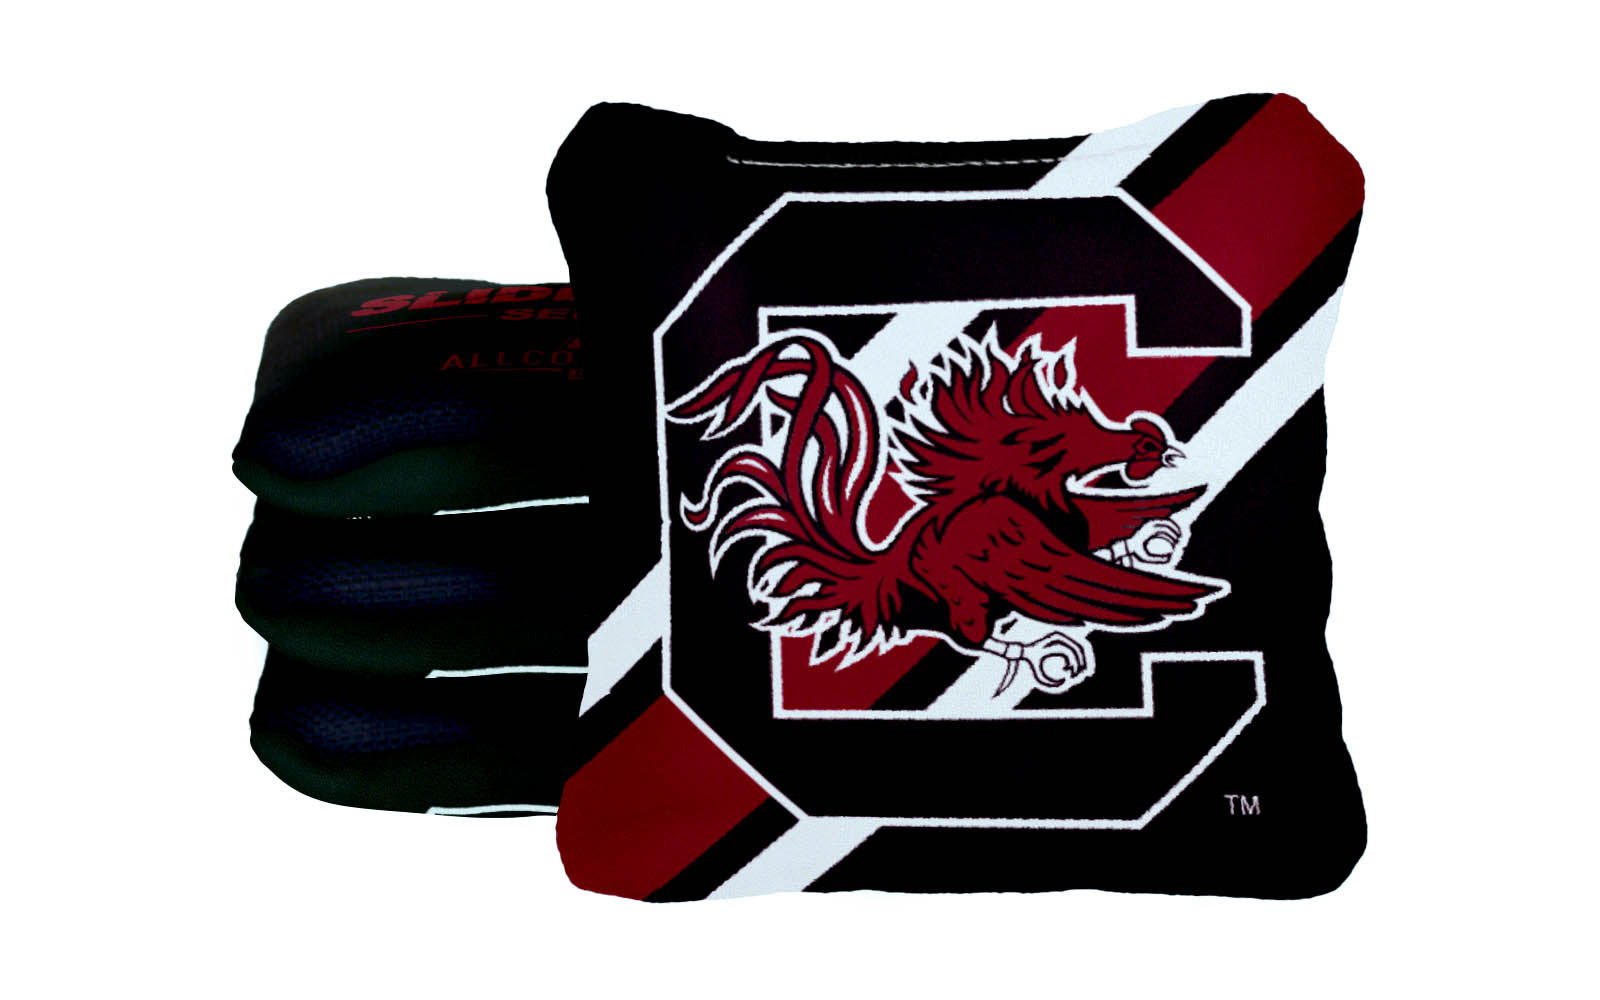 Officially Licensed Collegiate Cornhole Bags - AllCornhole Slide Rite - Set of 4 - University of South Carolina